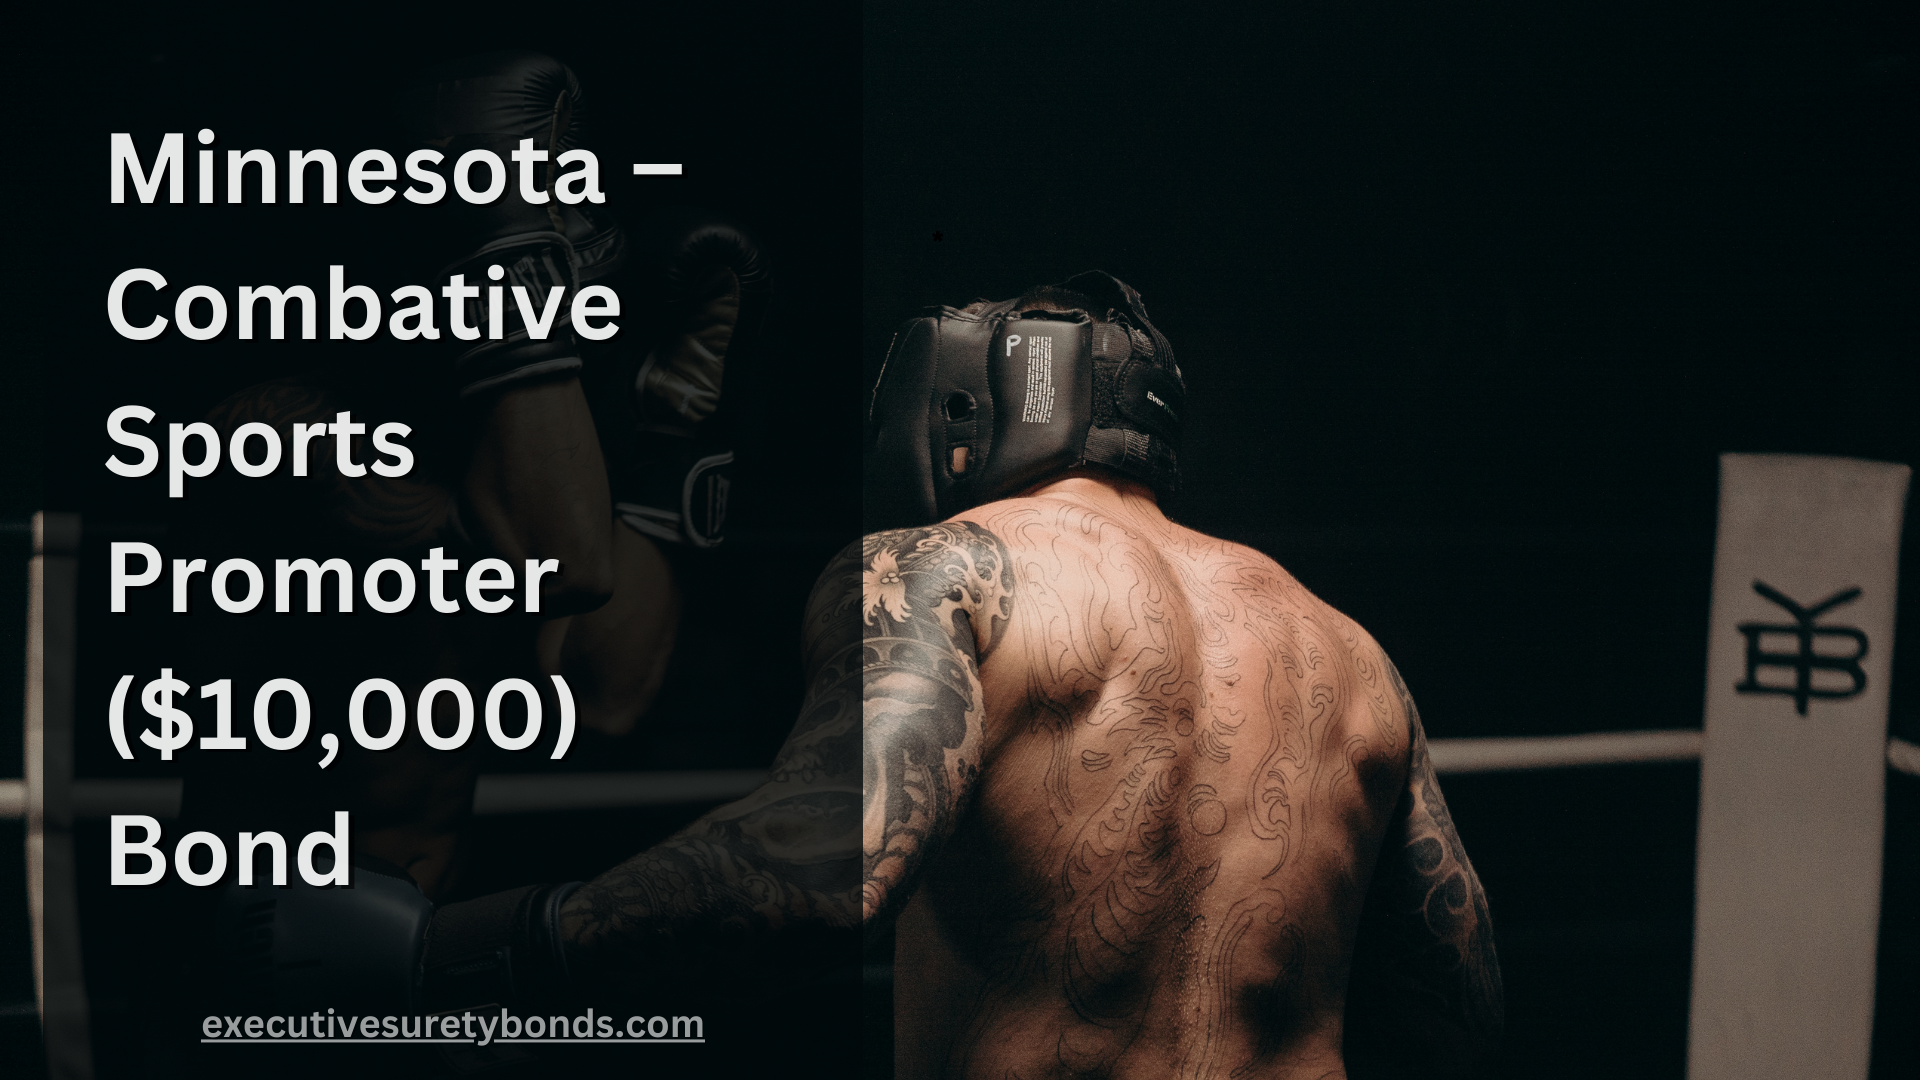 Minnesota – Combative Sports Promoter ($10,000) Bond